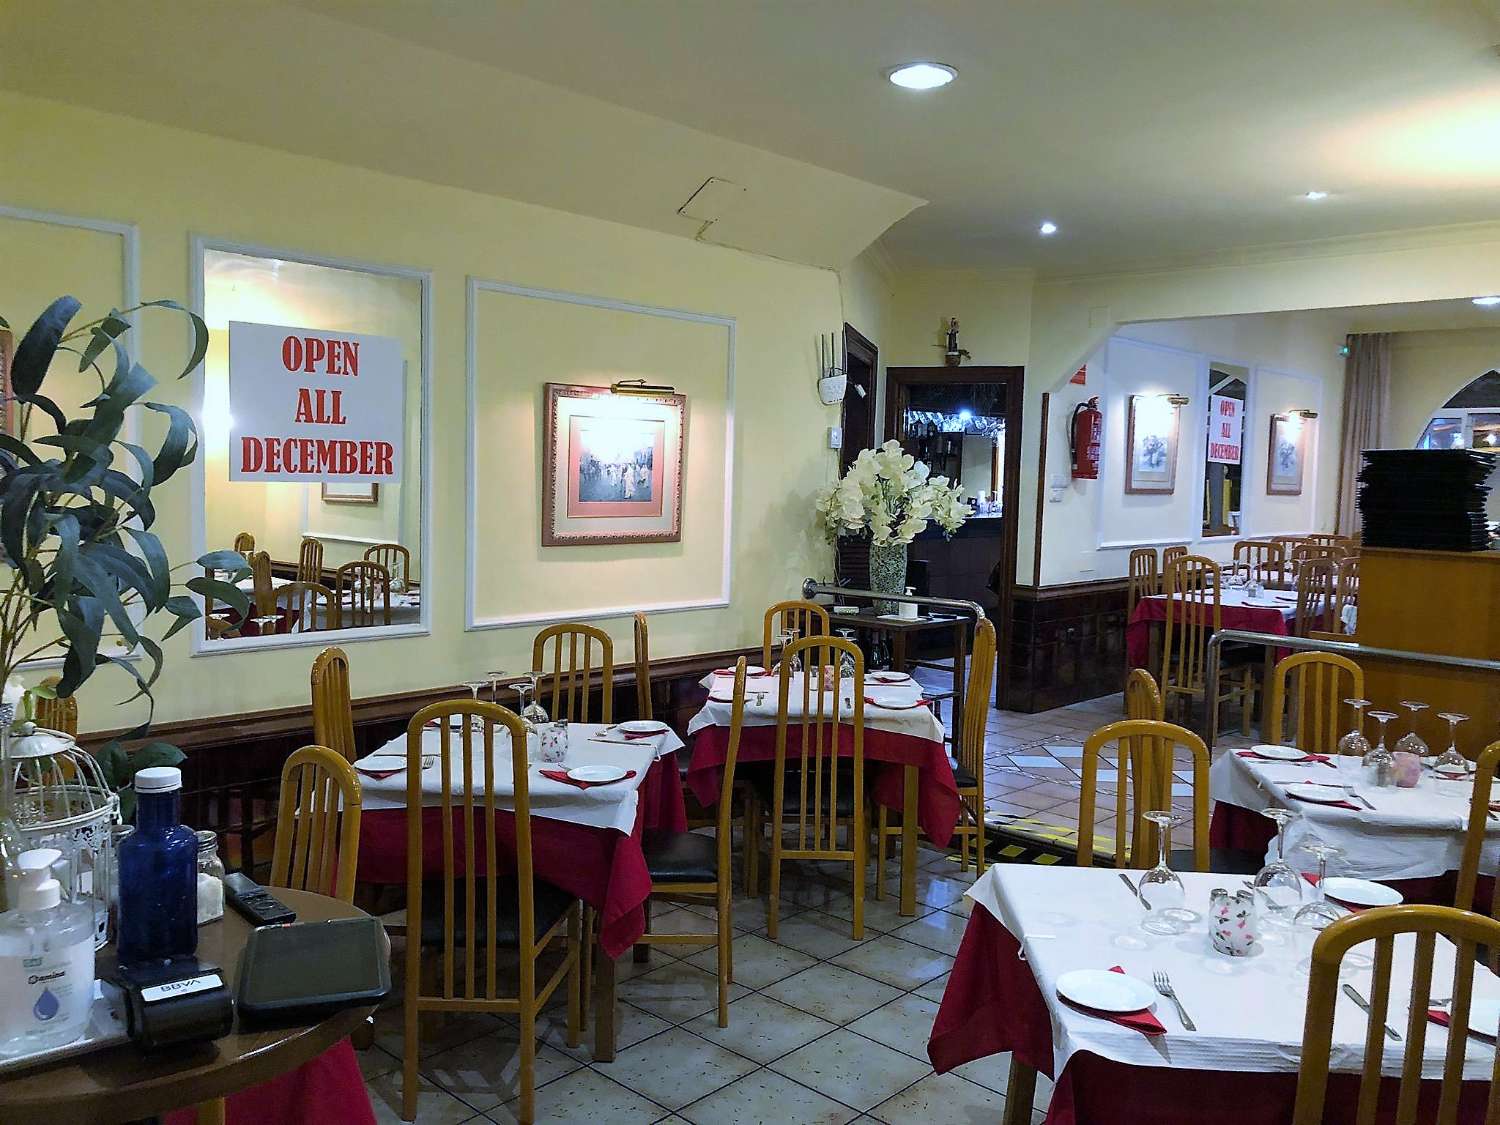 Restaurant for sale in Benalmadena Costa del Sol - IDEAL BUFFET - Great TURNKEY Restaurant